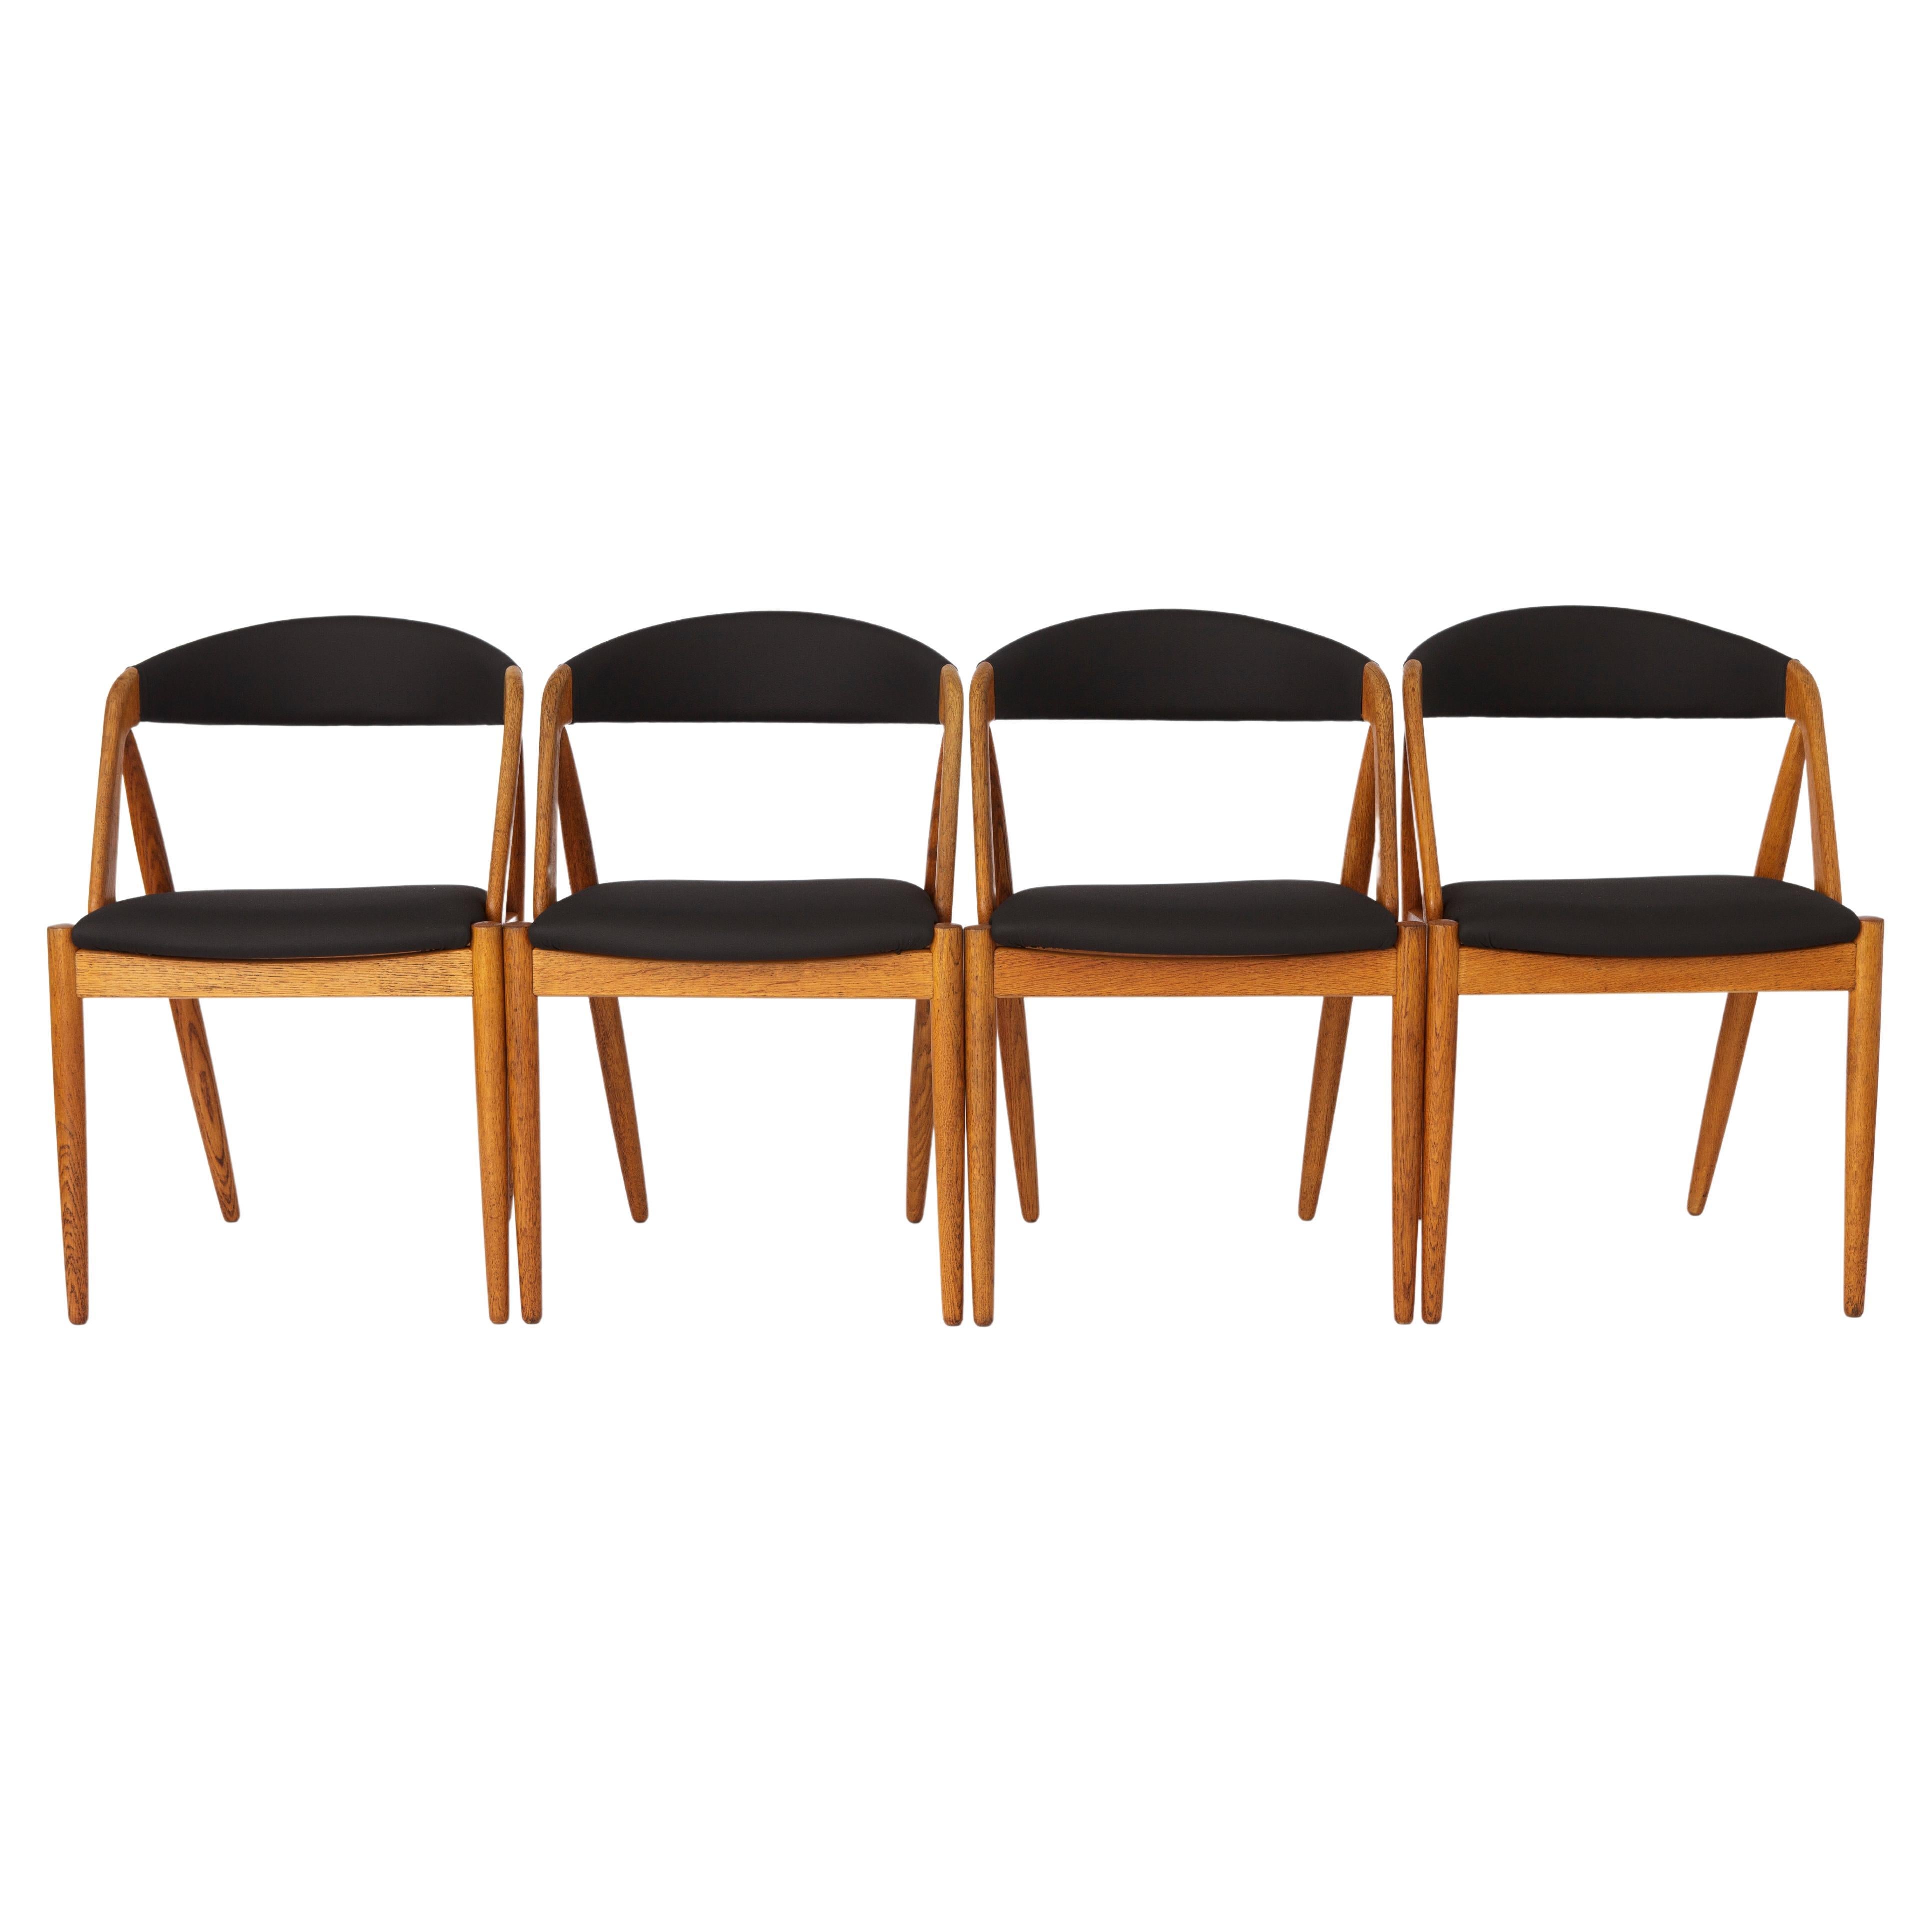 4 Kai Kristiansen Chairs 1960s - Model 31, Vintage Oak For Sale